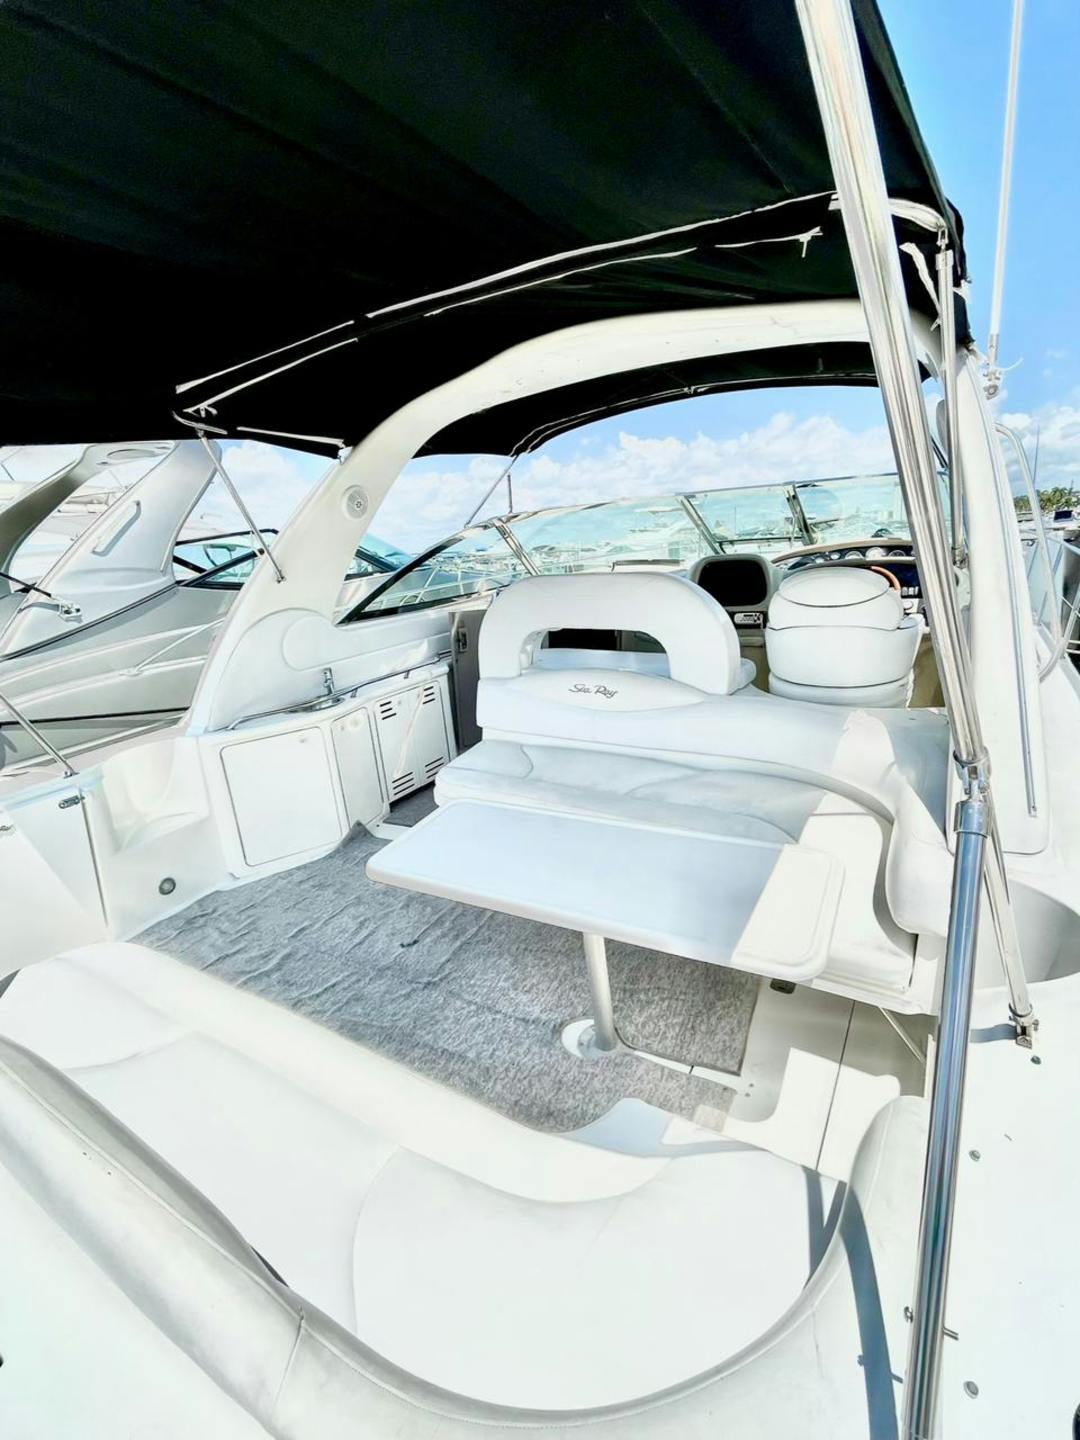 44' Sea Ray luxury charter yacht - Cancún, Mexico - 3